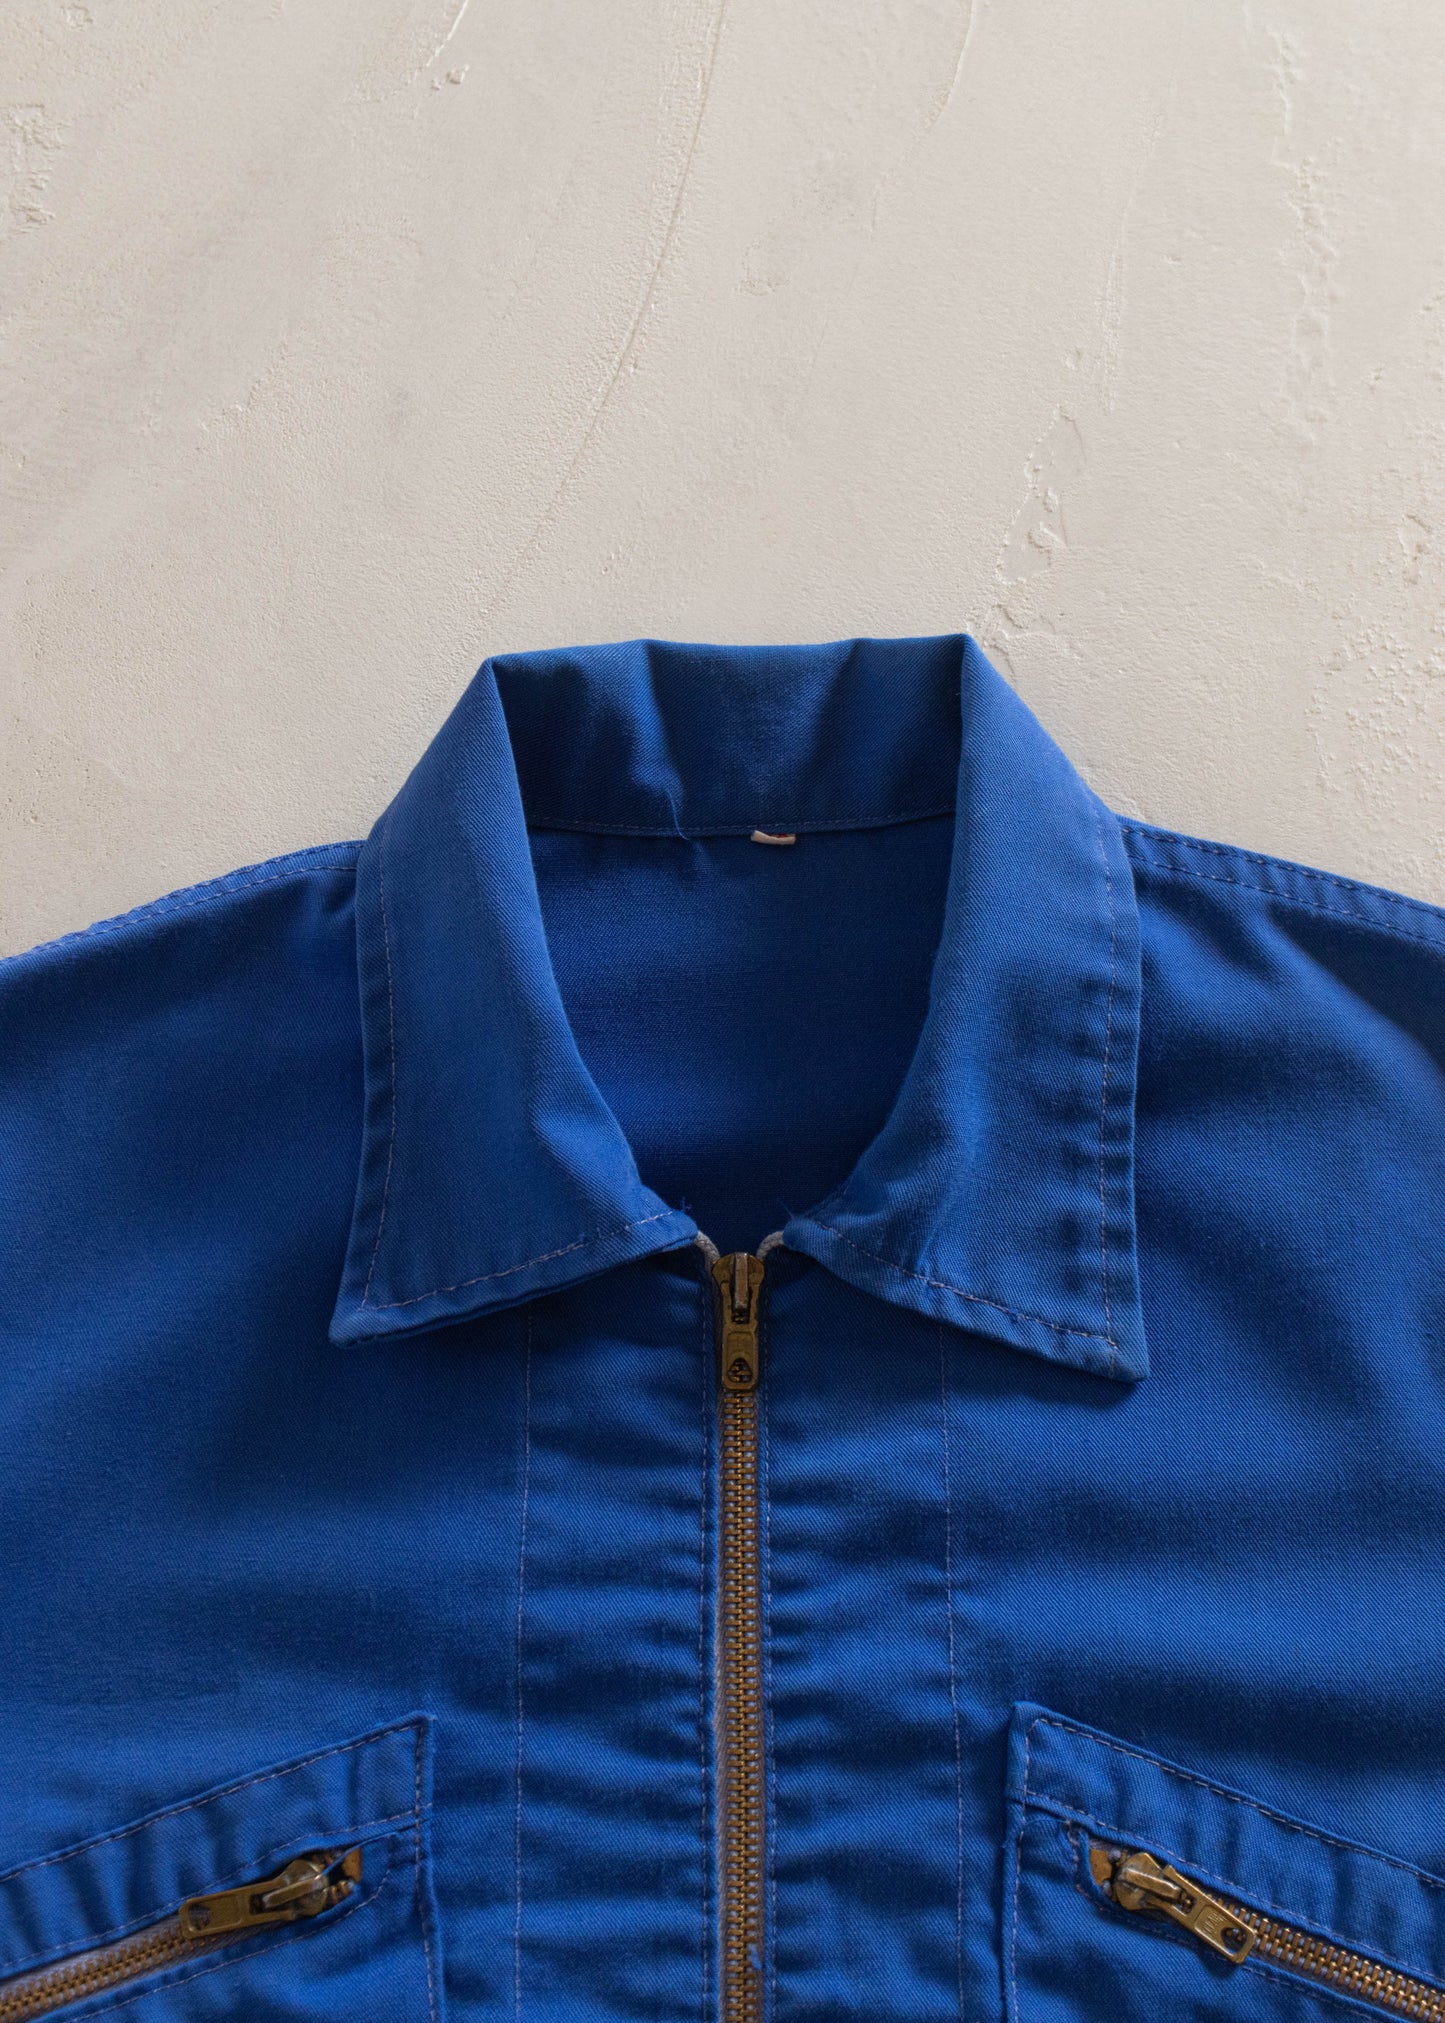 1980s Adolphe Lafont French Workwear Chore Jacket Size XS/S